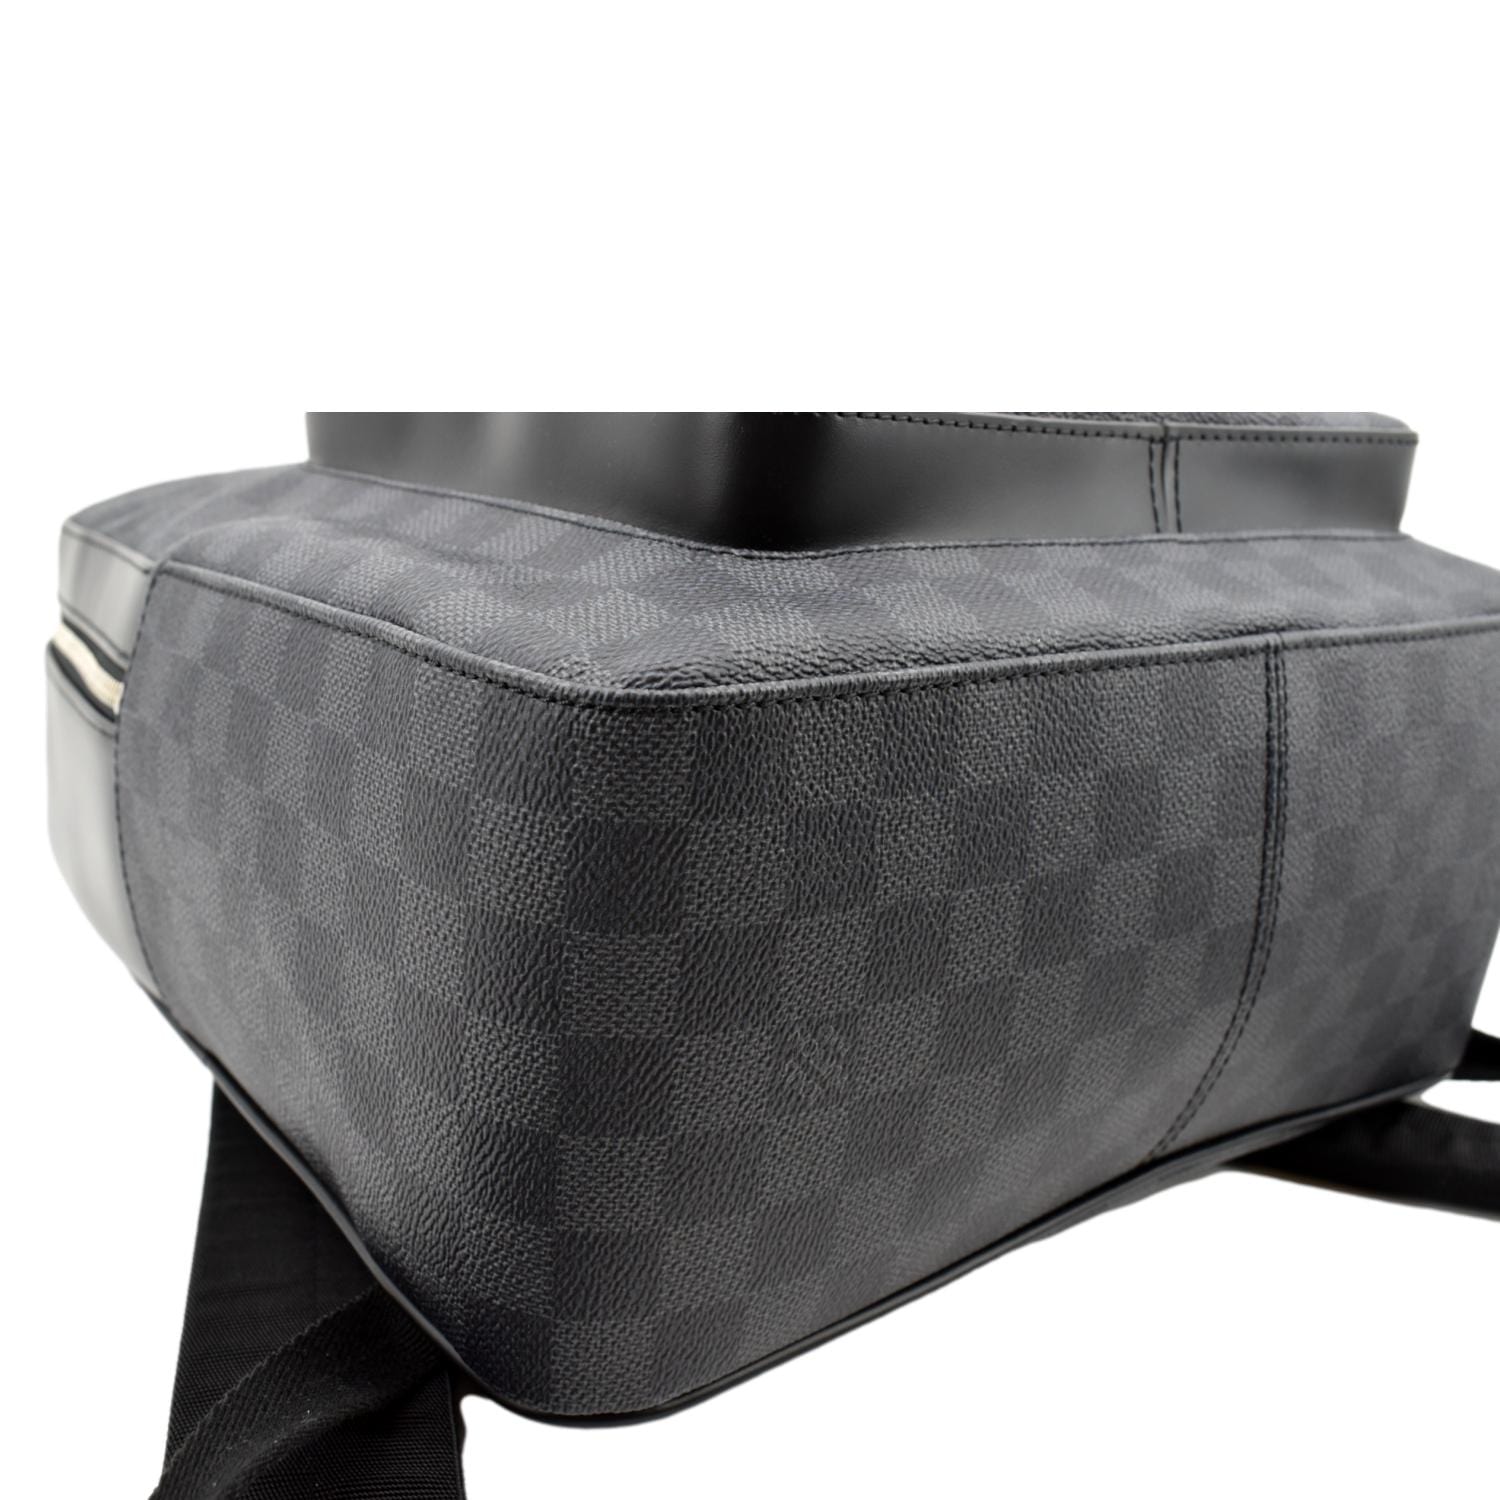 Louis Vuitton Josh Interlinked Logo Damier Graphite Backpack Black